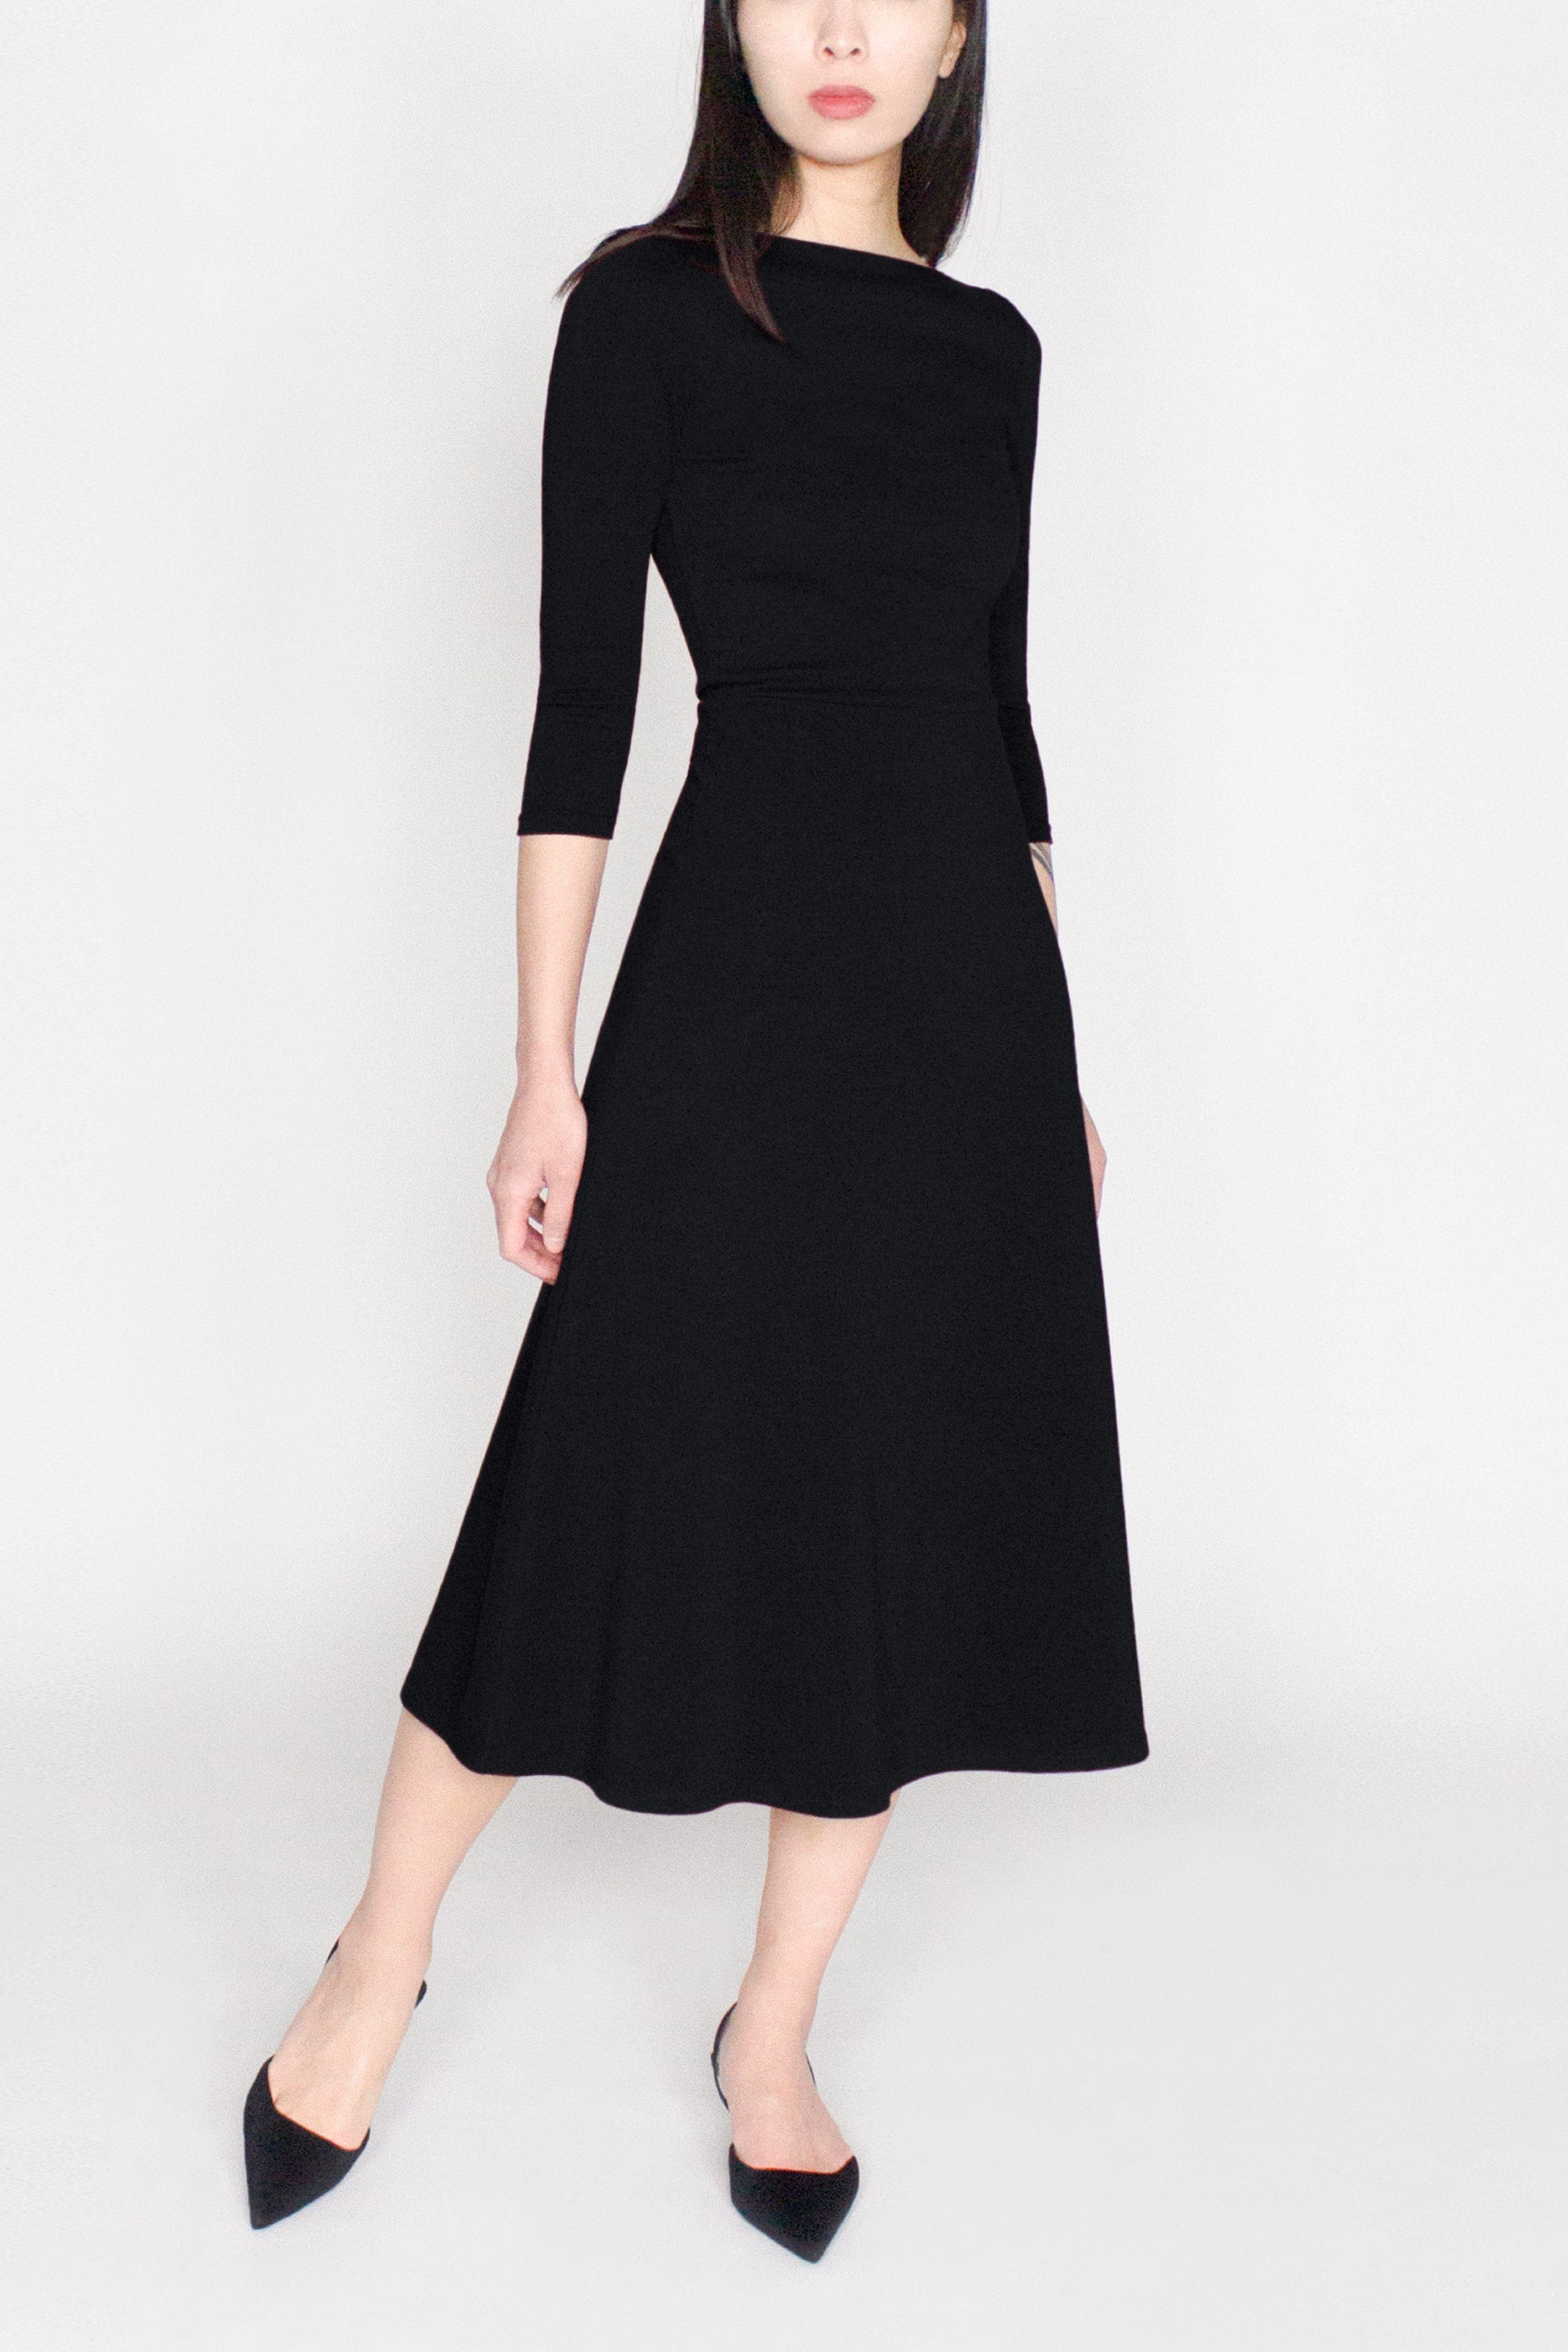 Meghan Markle's Boatneck Dresses: Shop Similar Styles | Us Weekly